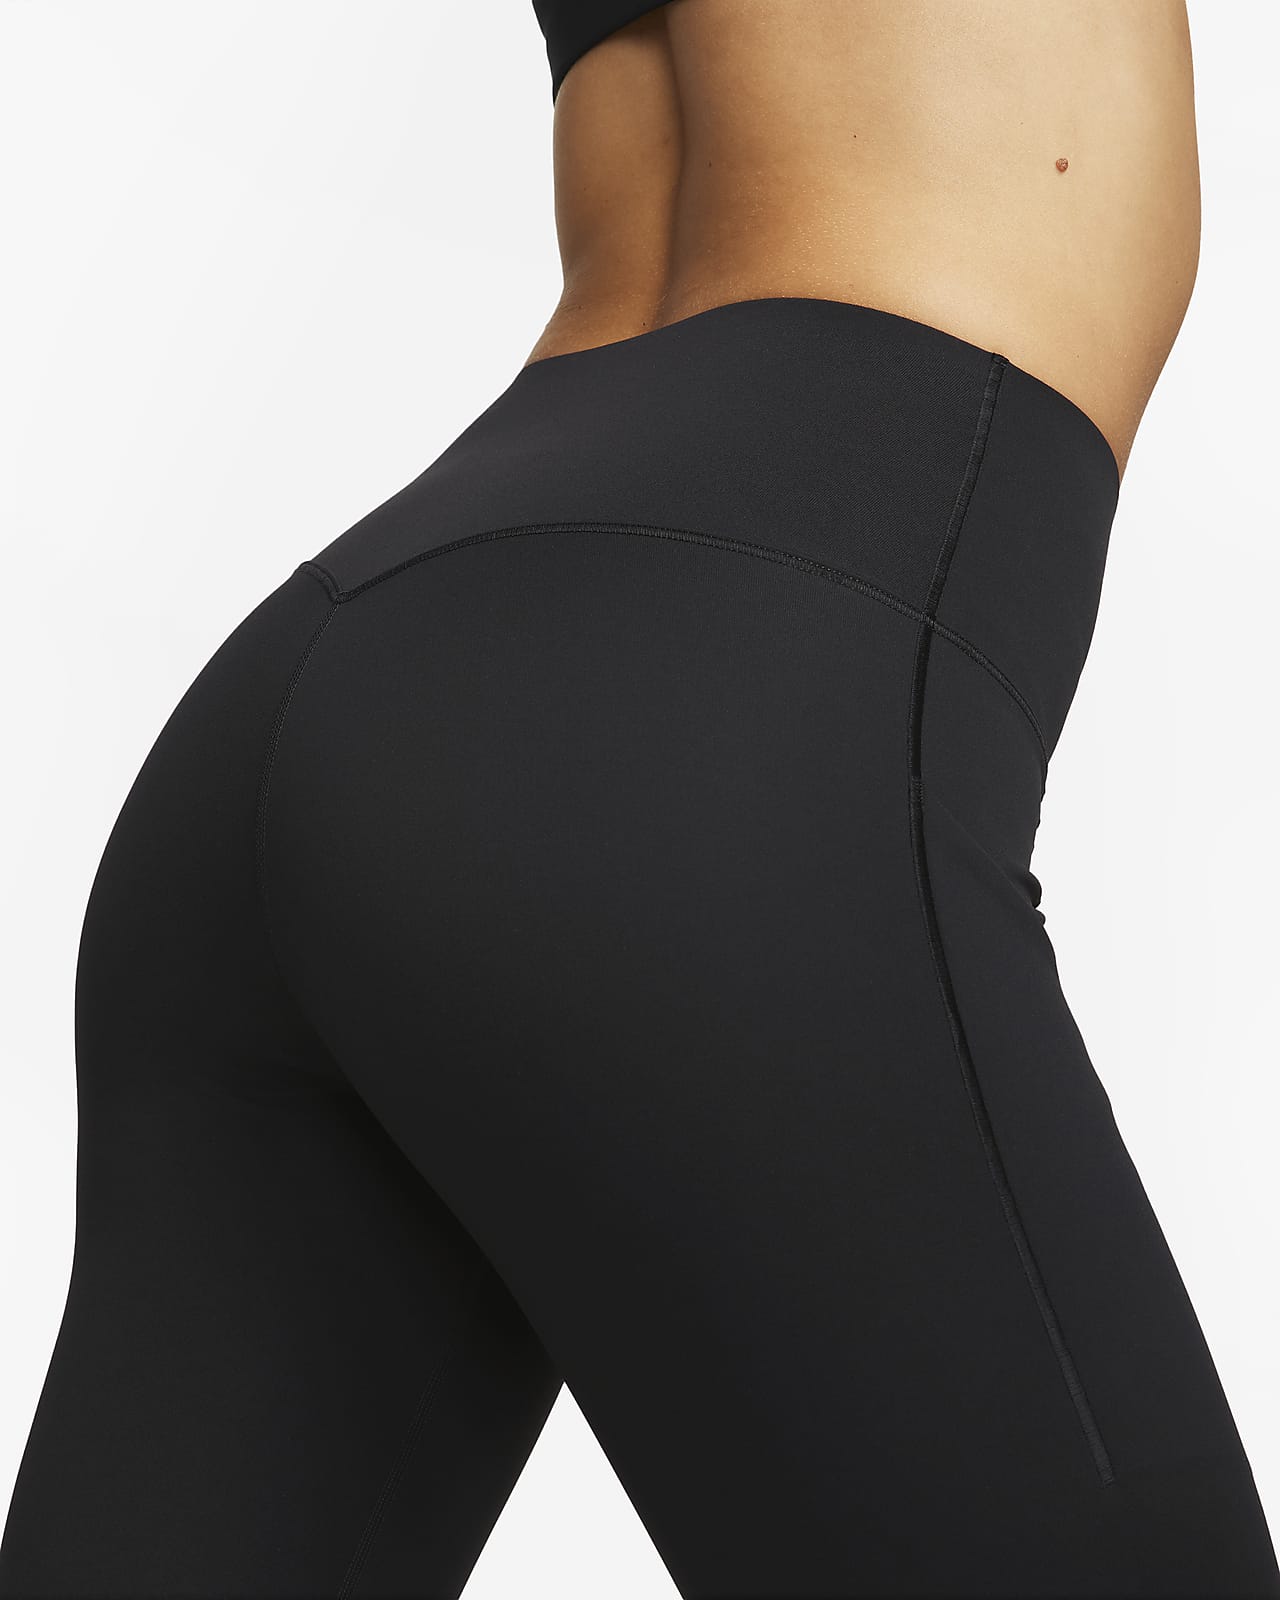 Nike Dri Fit Womens Medium Black Capri Capris Yoga Work Out